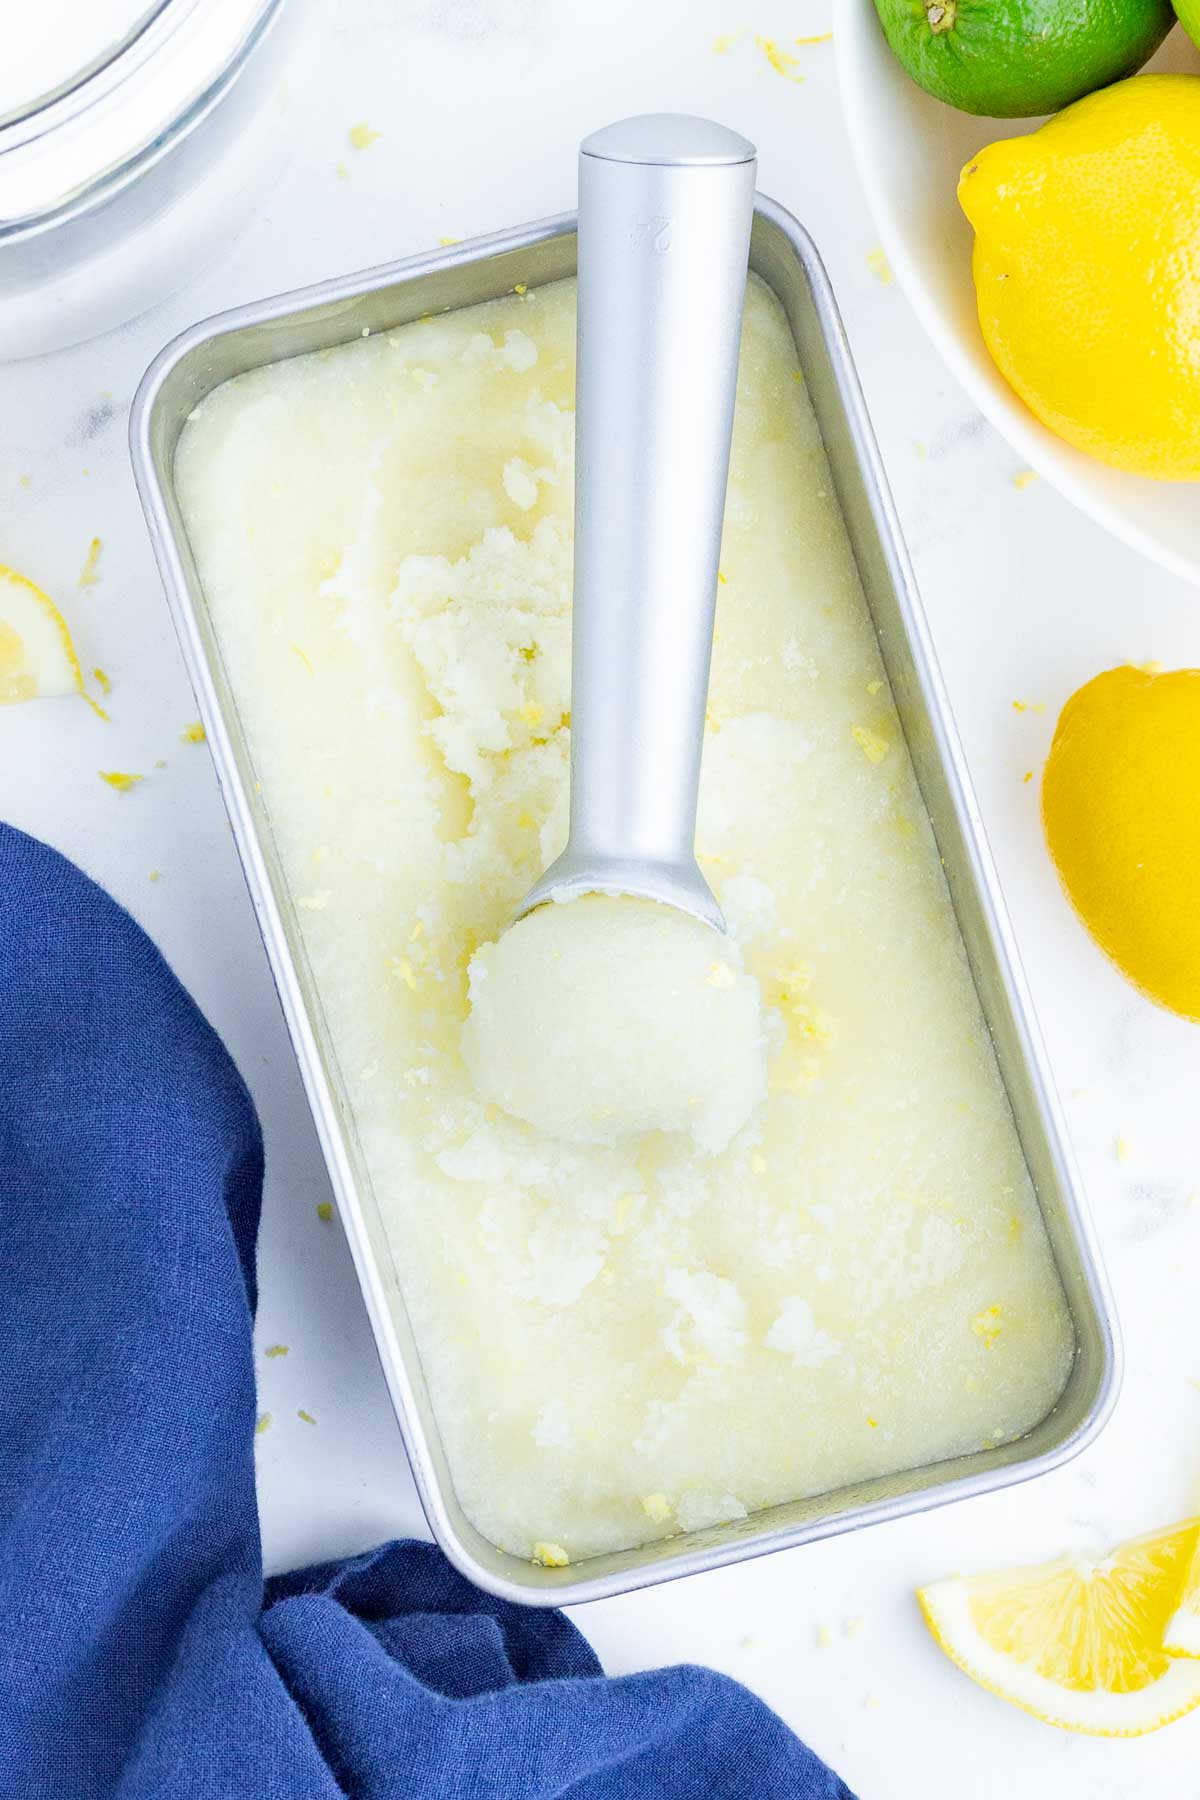 Lemon sorbet only needs 3 basic ingredients to make at home.